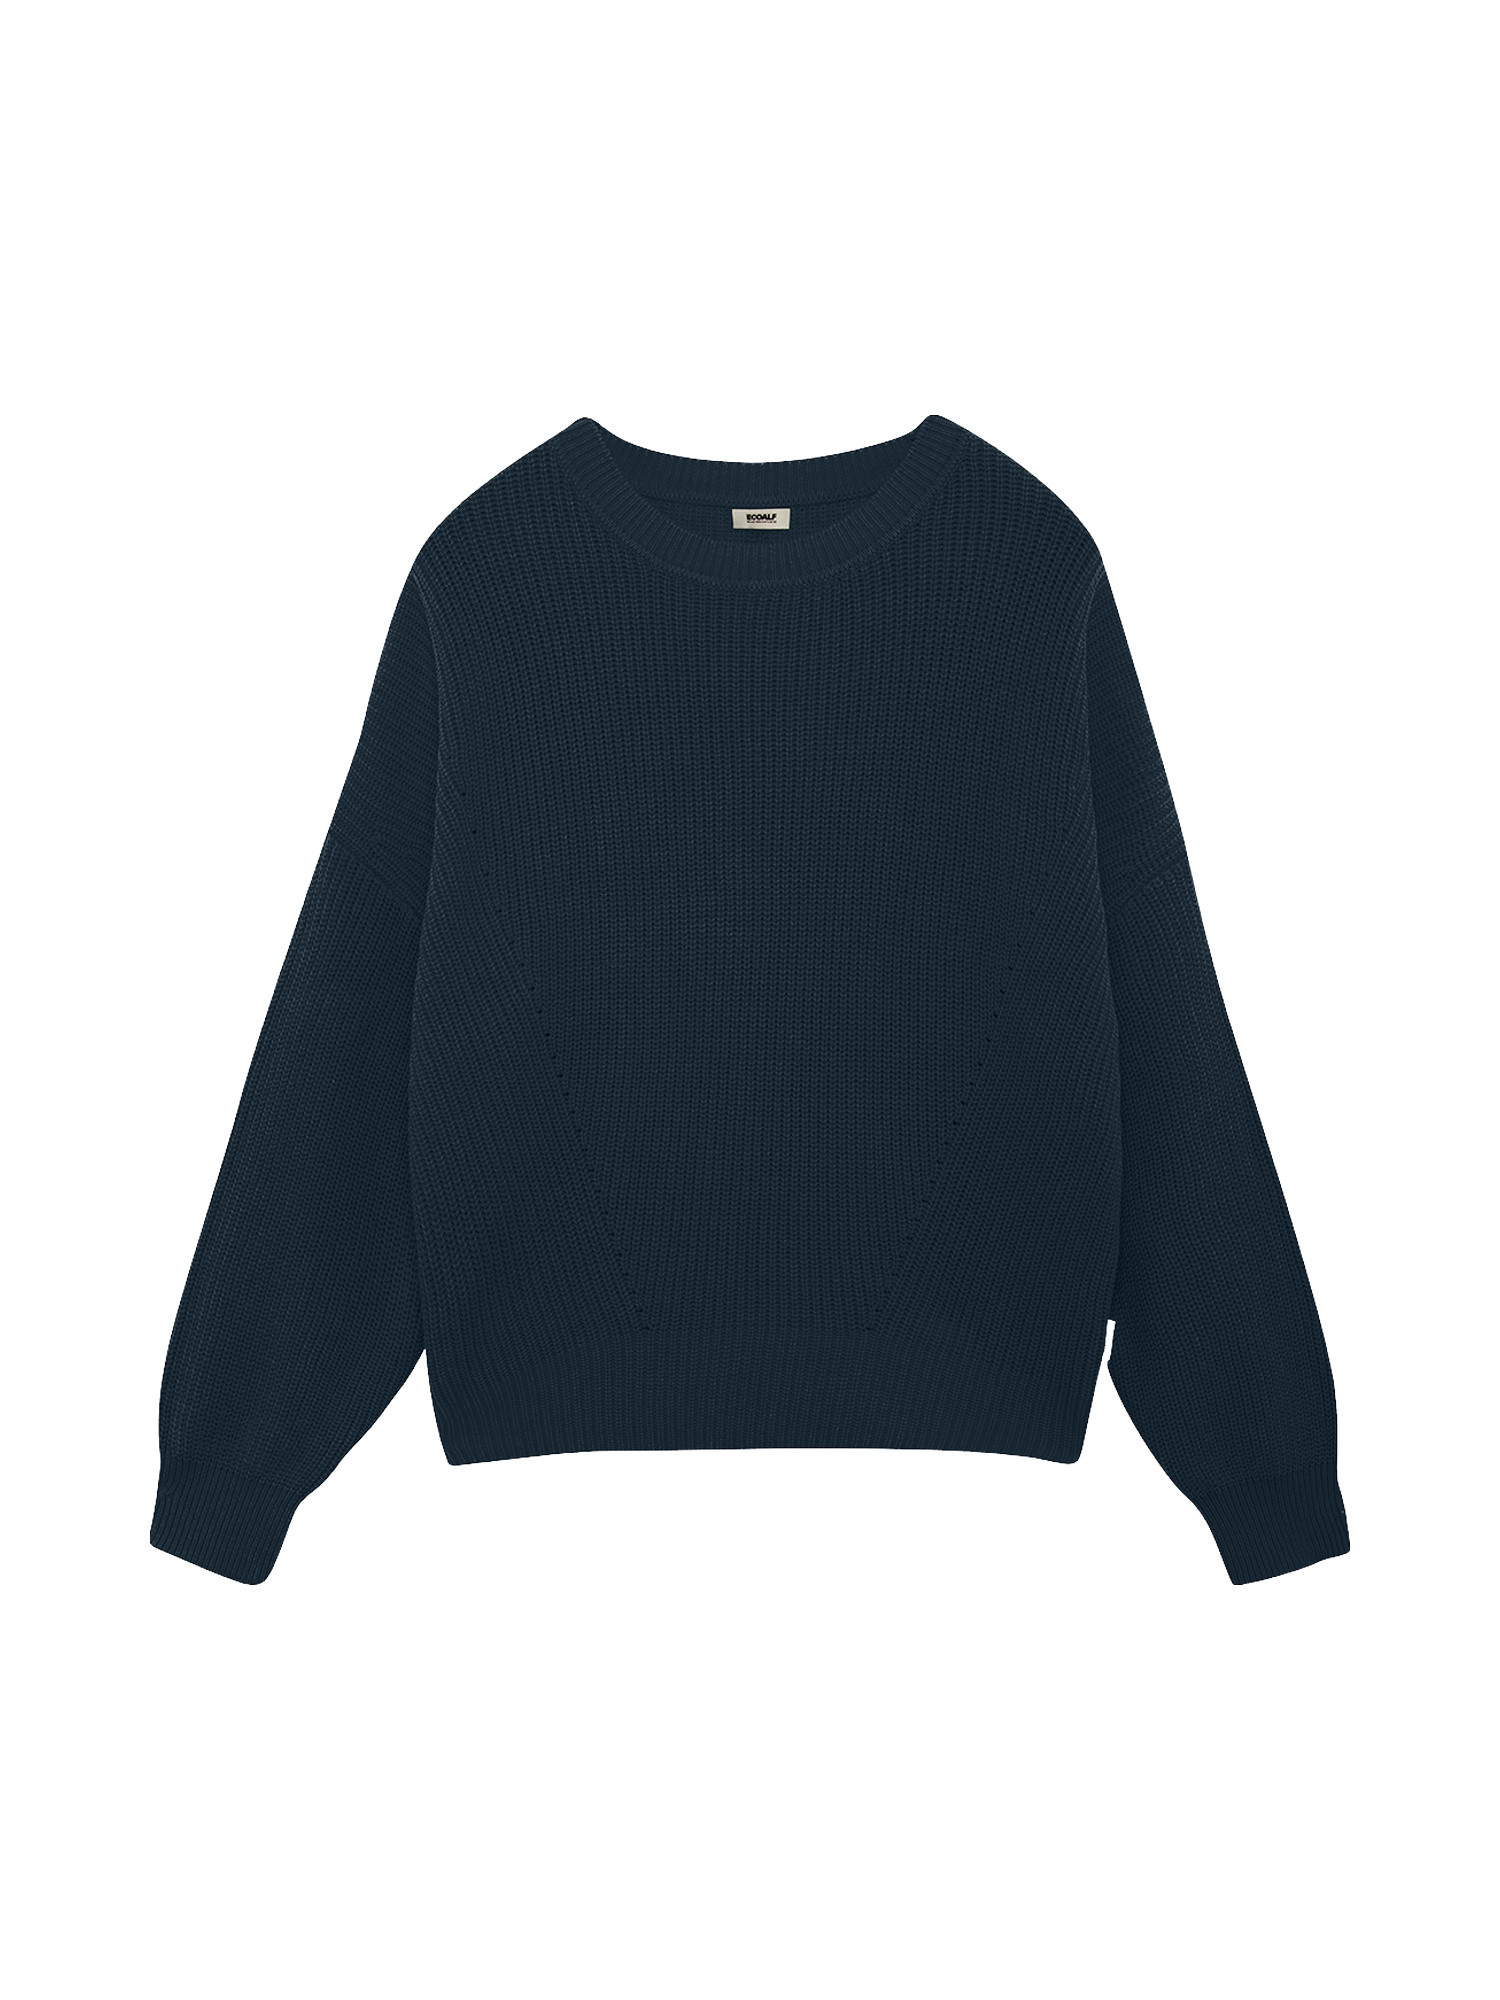 Ecoalf - Pullover Cedar in maglia, Blu, large image number 0